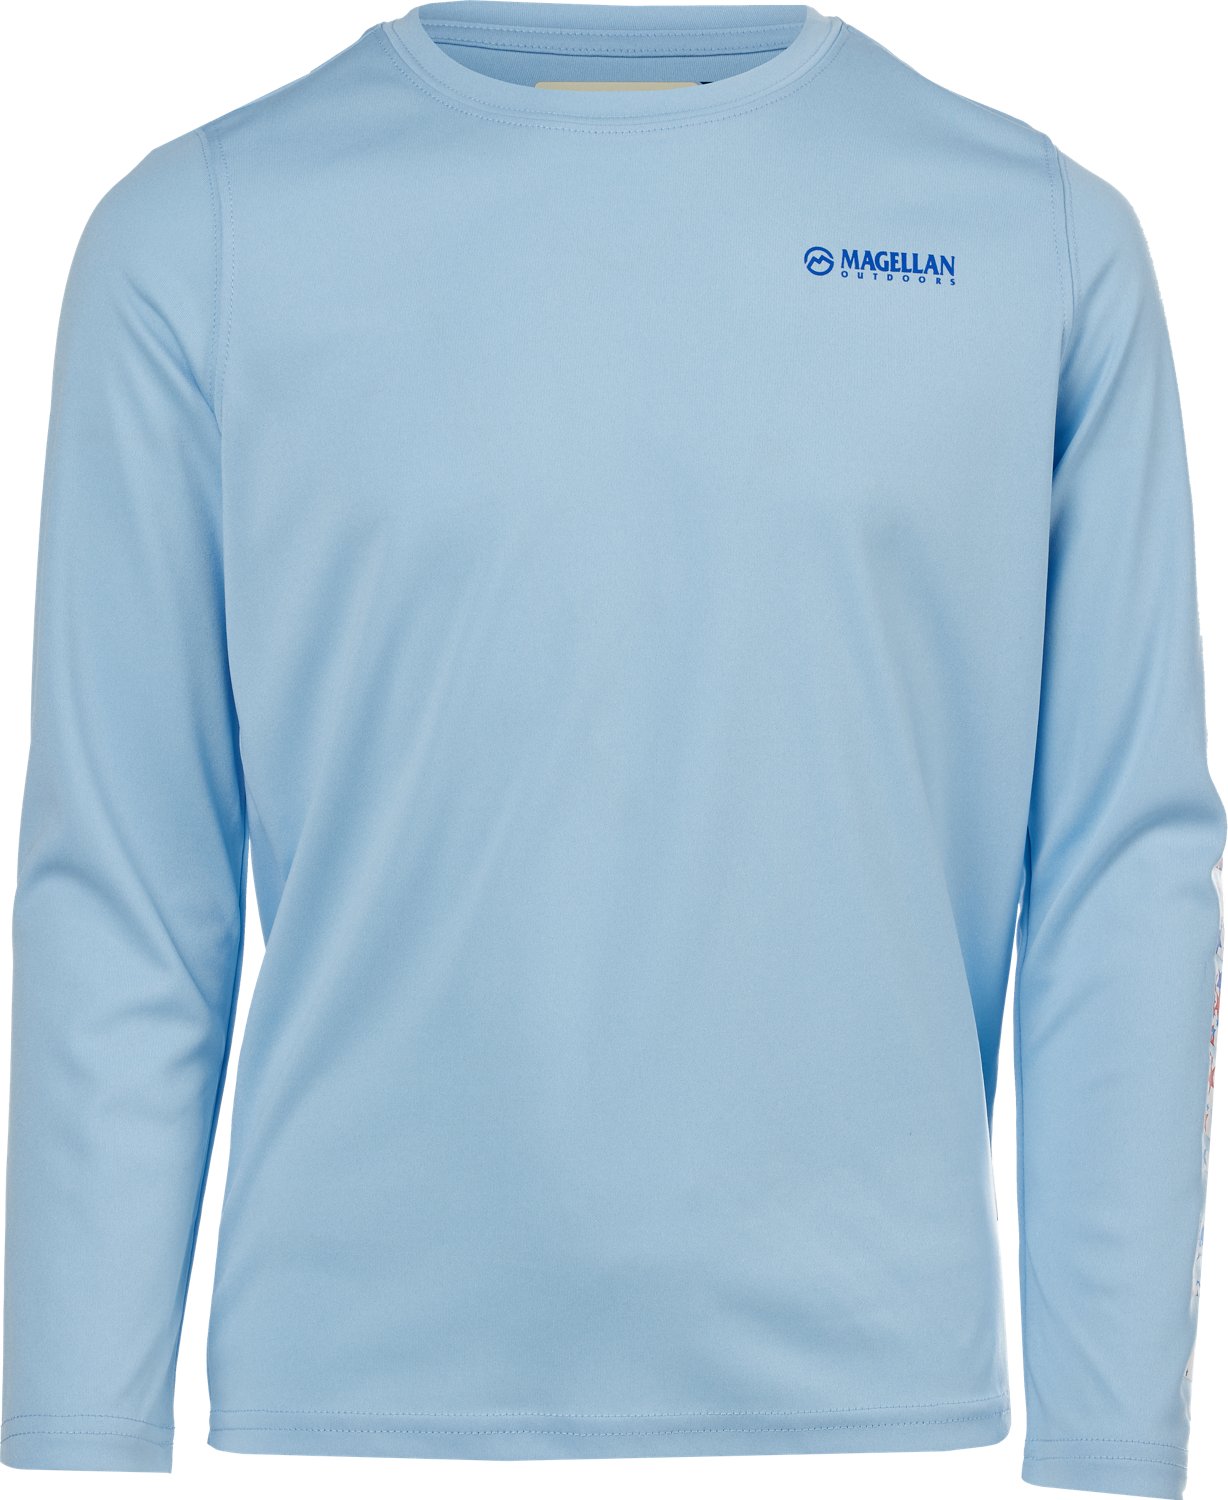 Magellan Outdoors, Tops, New Magellan Outdoors Caddo Lake Logo Crew  Boyfriend Fit Tshirt Size Medium